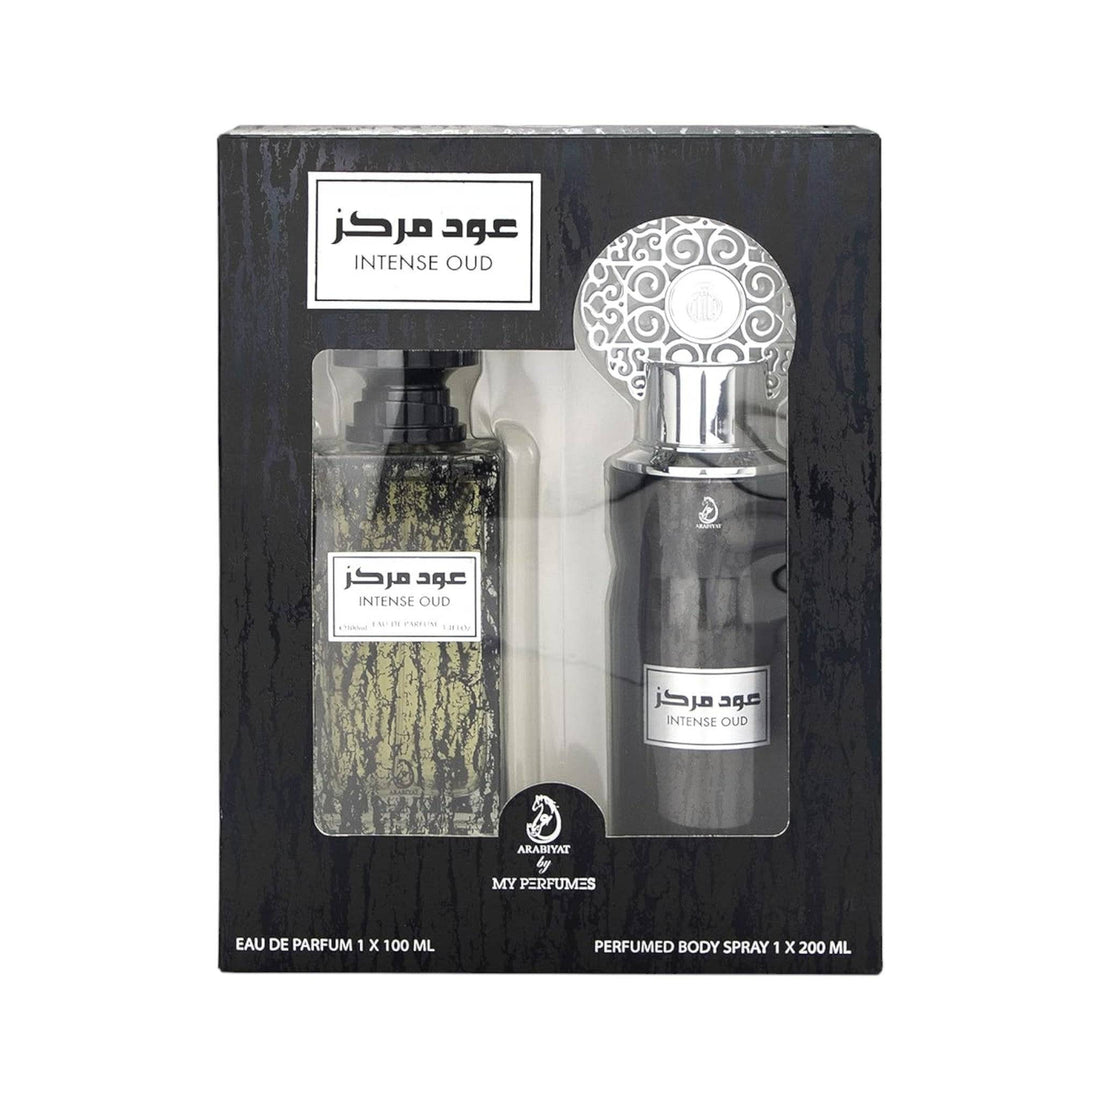 Elegant Arabiyat Intense Oud Gift Set, showcasing the luxury Eau De Parfum and Perfume Spray bottles.